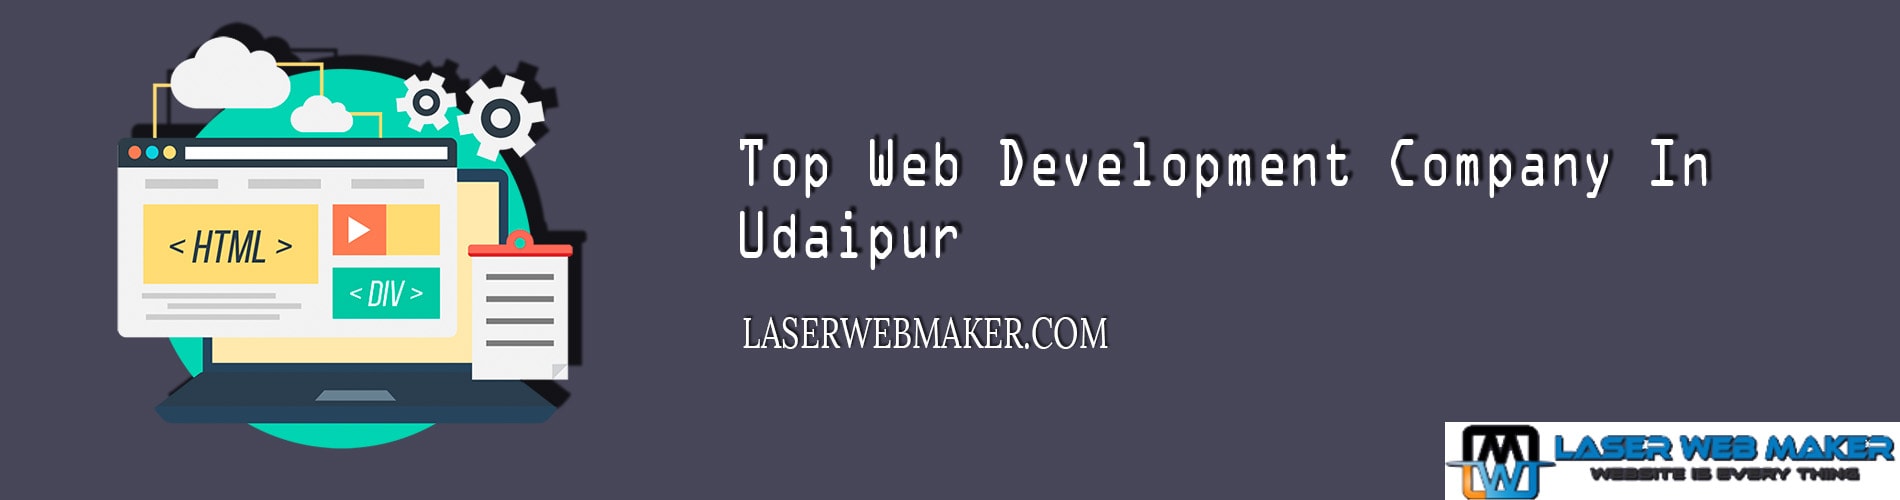 Top Web Development Company In Udaipur